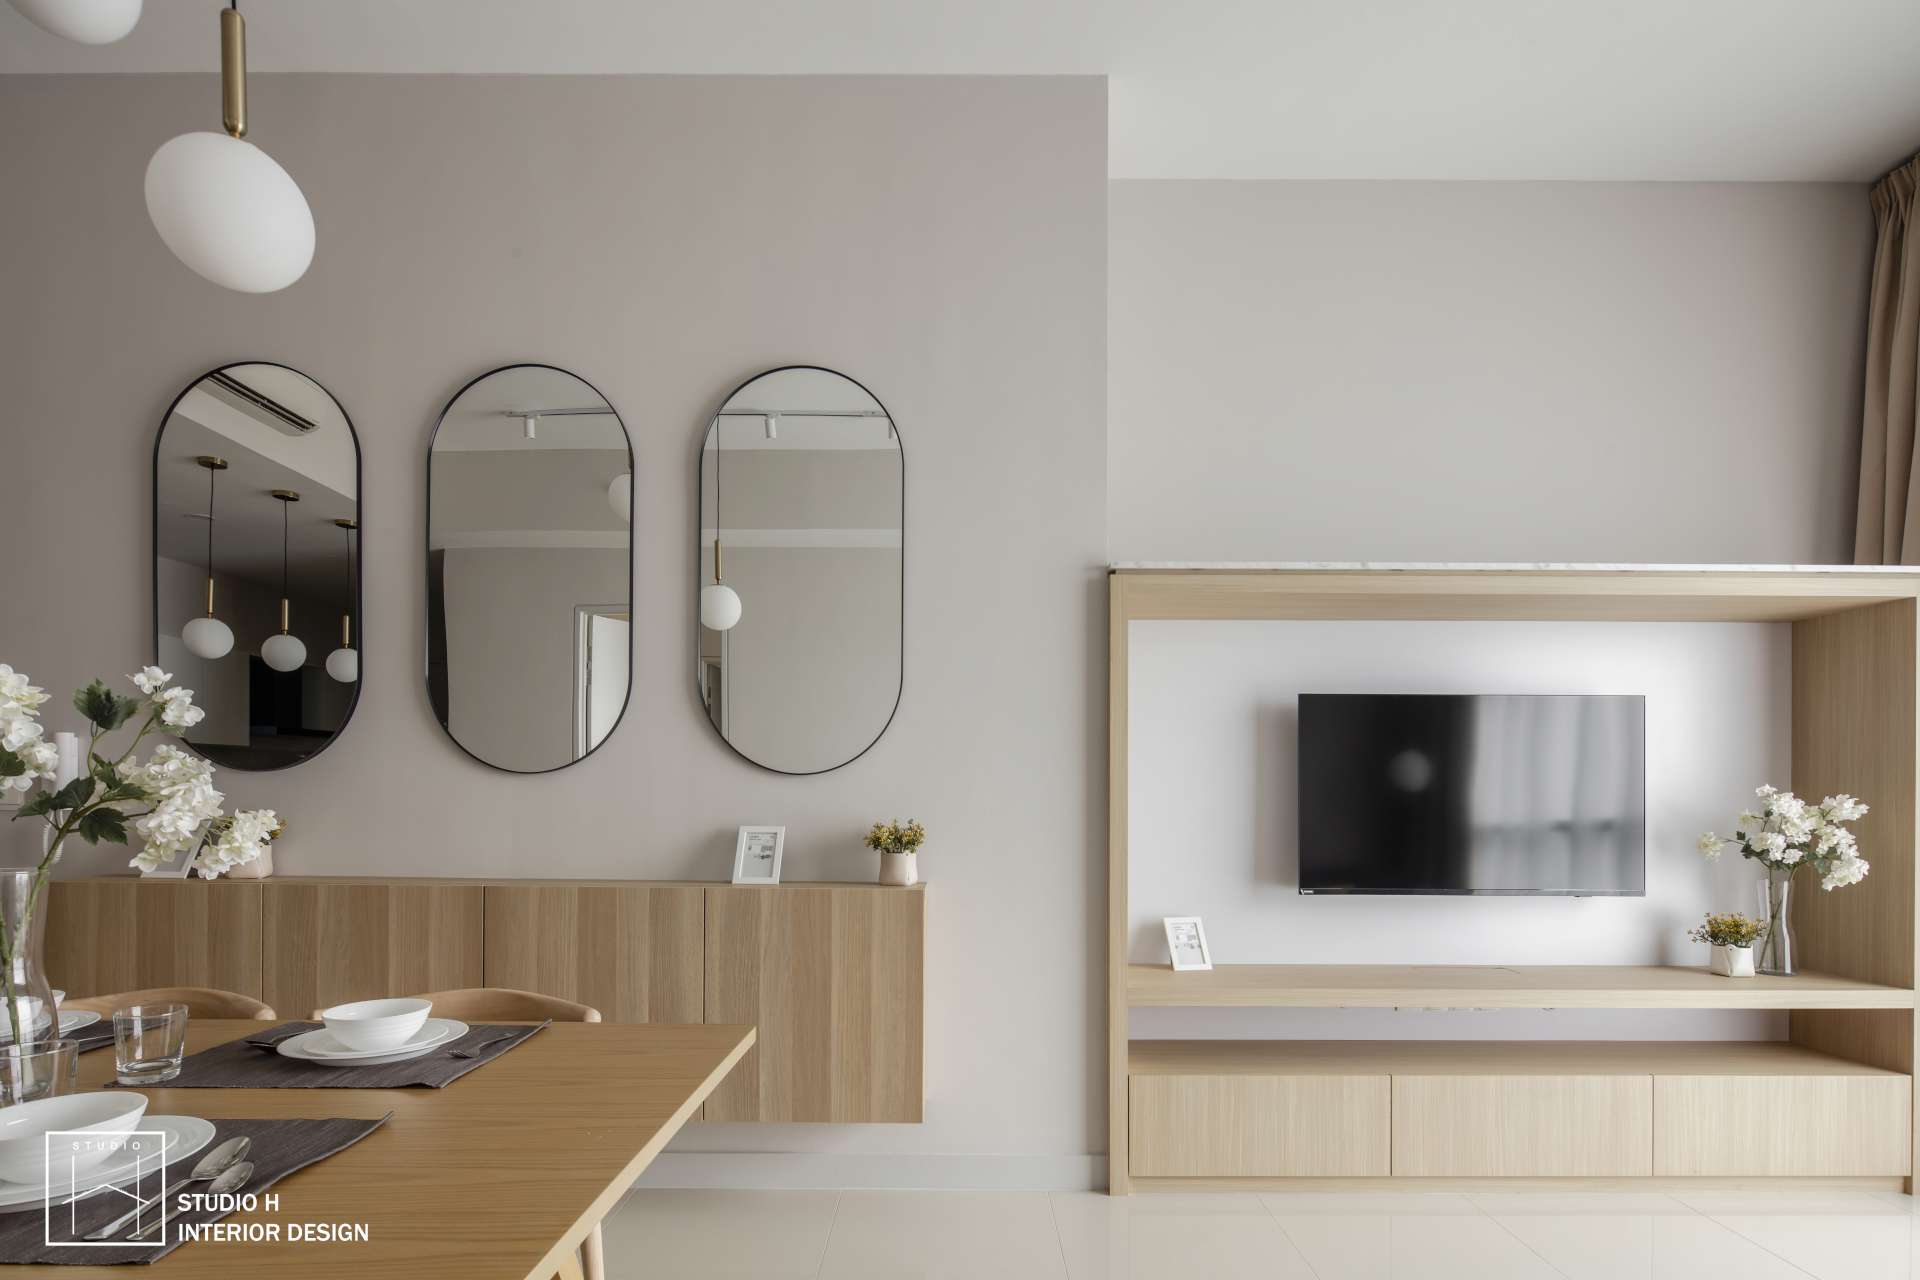 House-10-dining-living-tv-mirror-beige-muji-scandinavian-interior-design